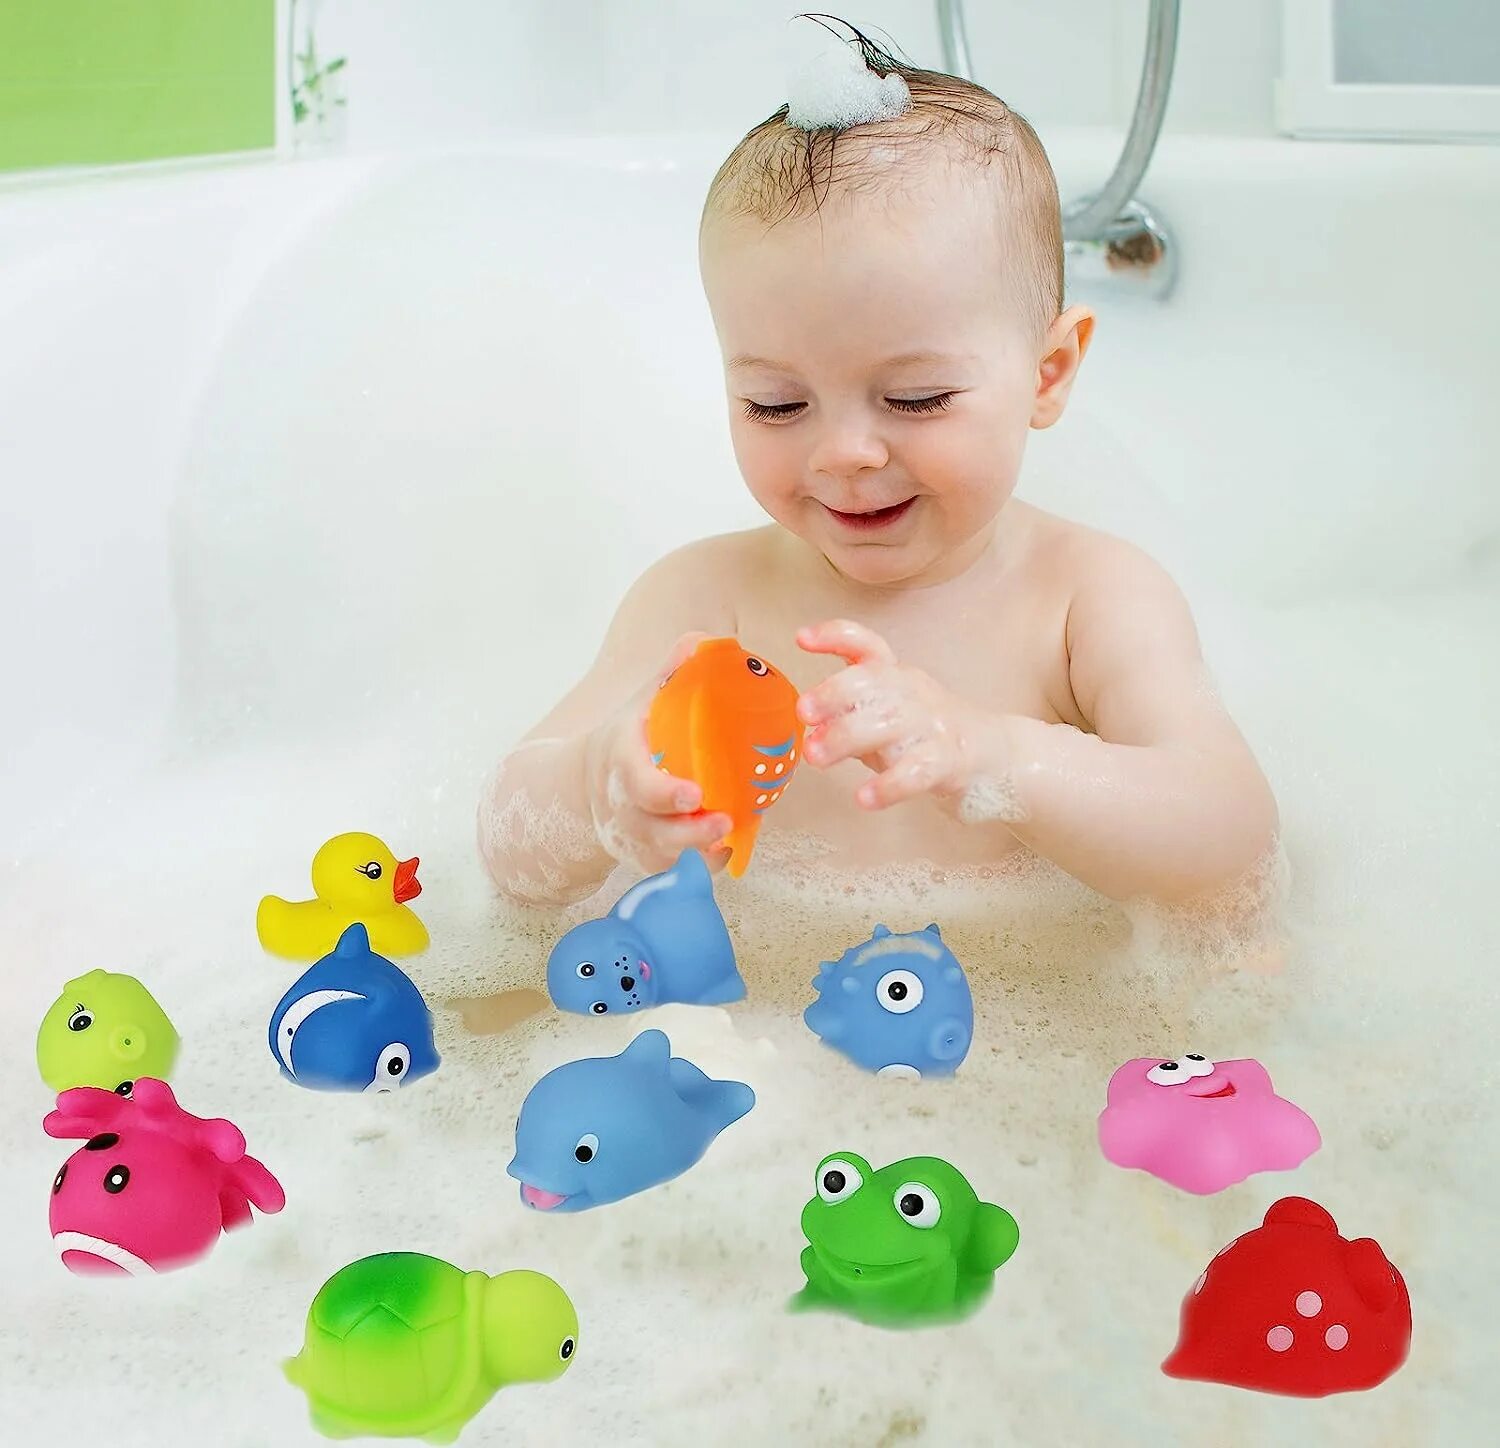 Child bath. Игрушки для купания. Игрушка для купания в ванной. Игрушки для ванной для детей. Игрушки в ванную для младенцев.